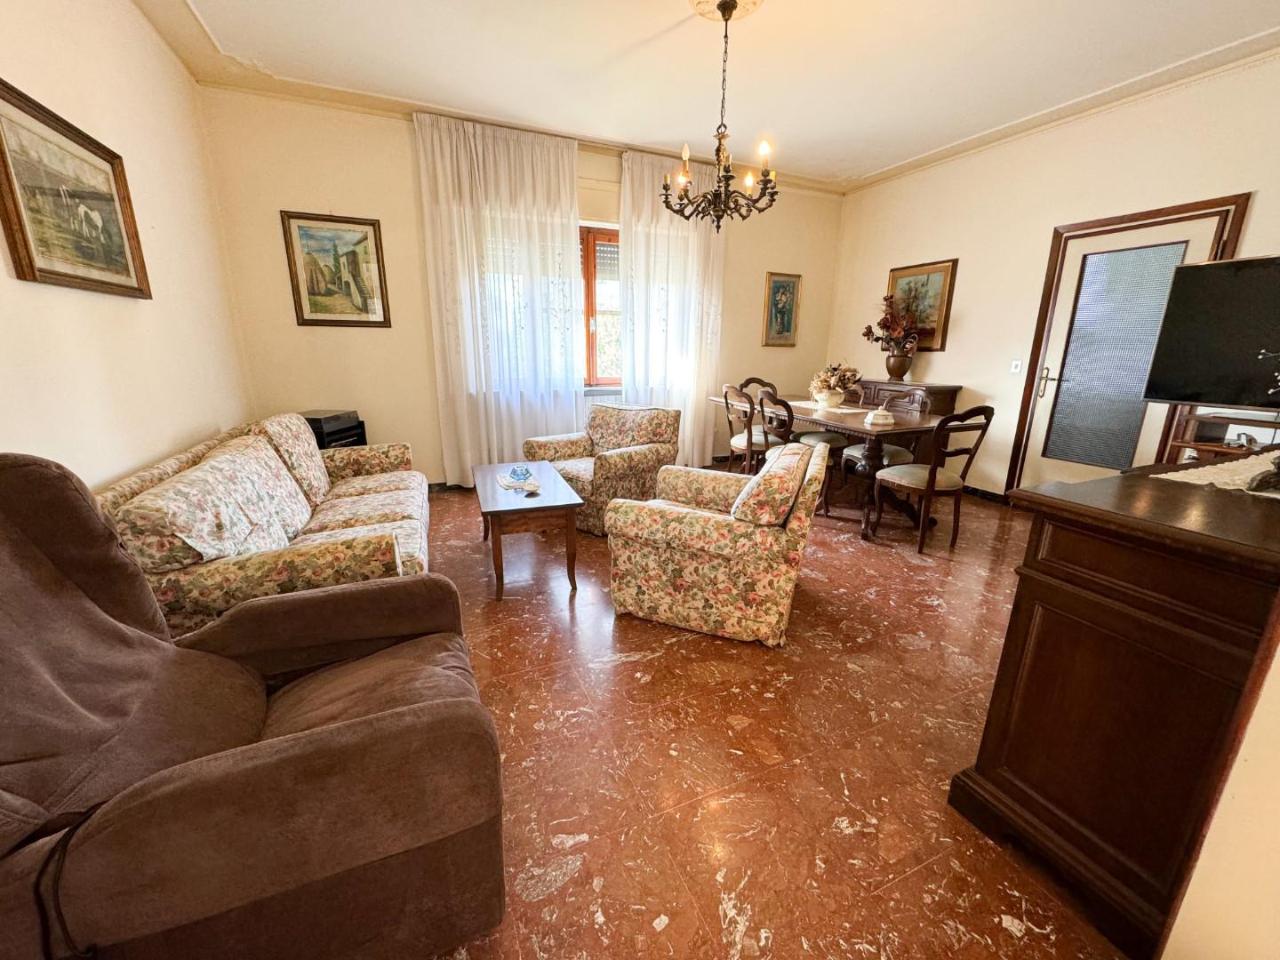 Villa in vendita a San Giuliano Terme